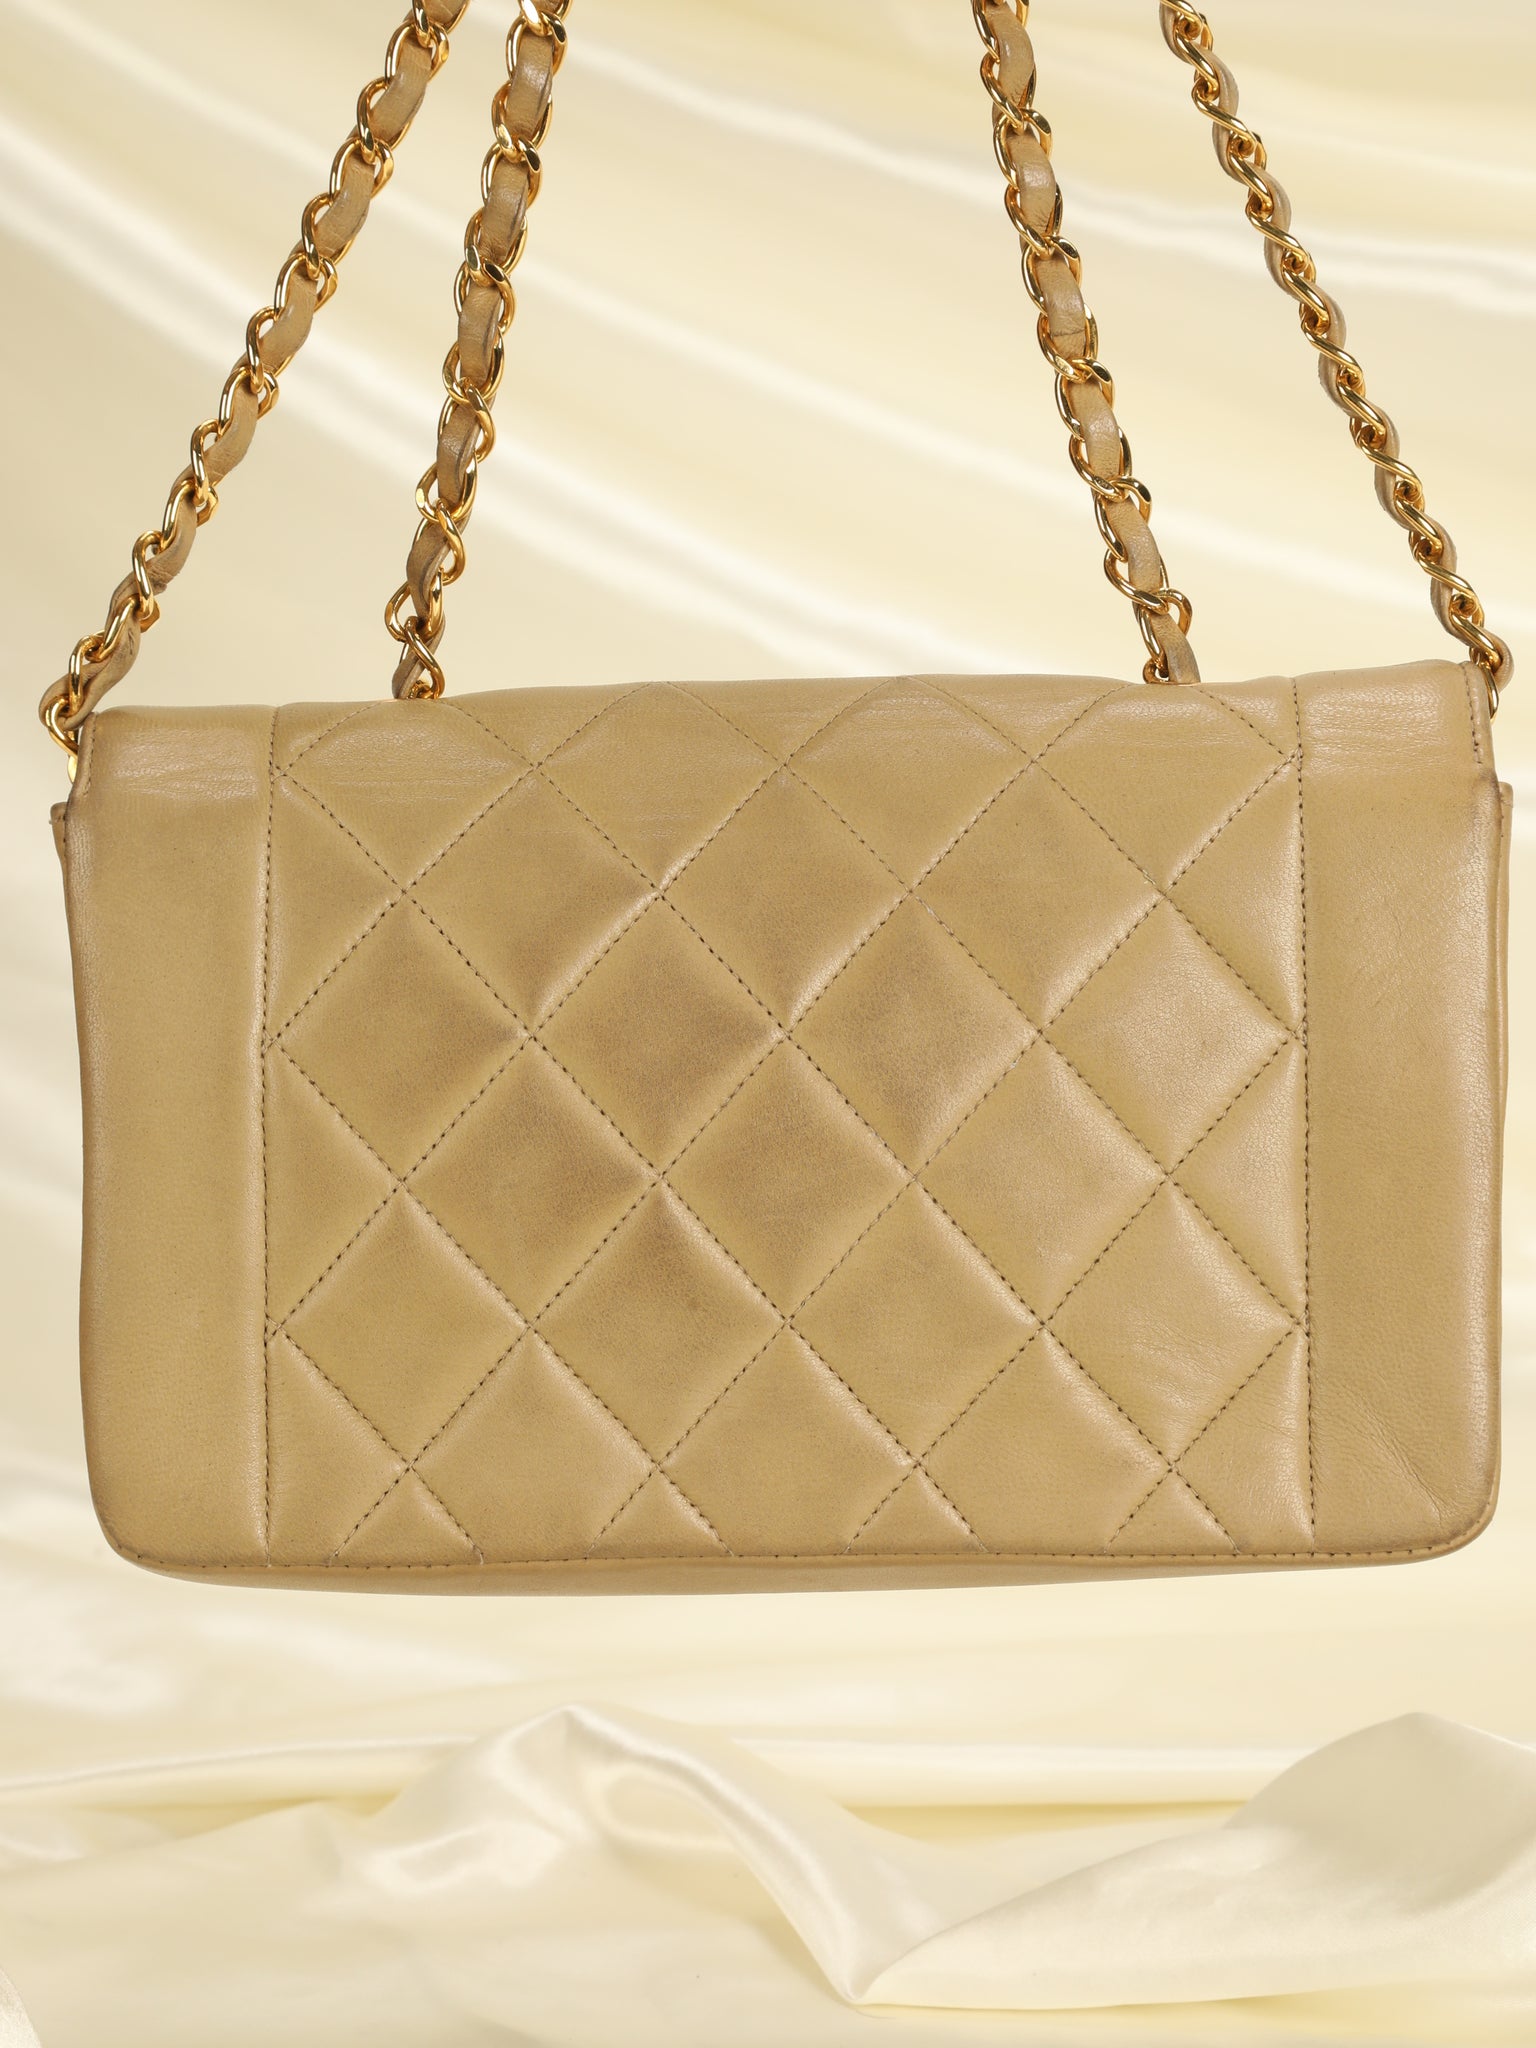 Chanel Beige Crumpled Lambskin Leather Mini Flap Bag Chanel